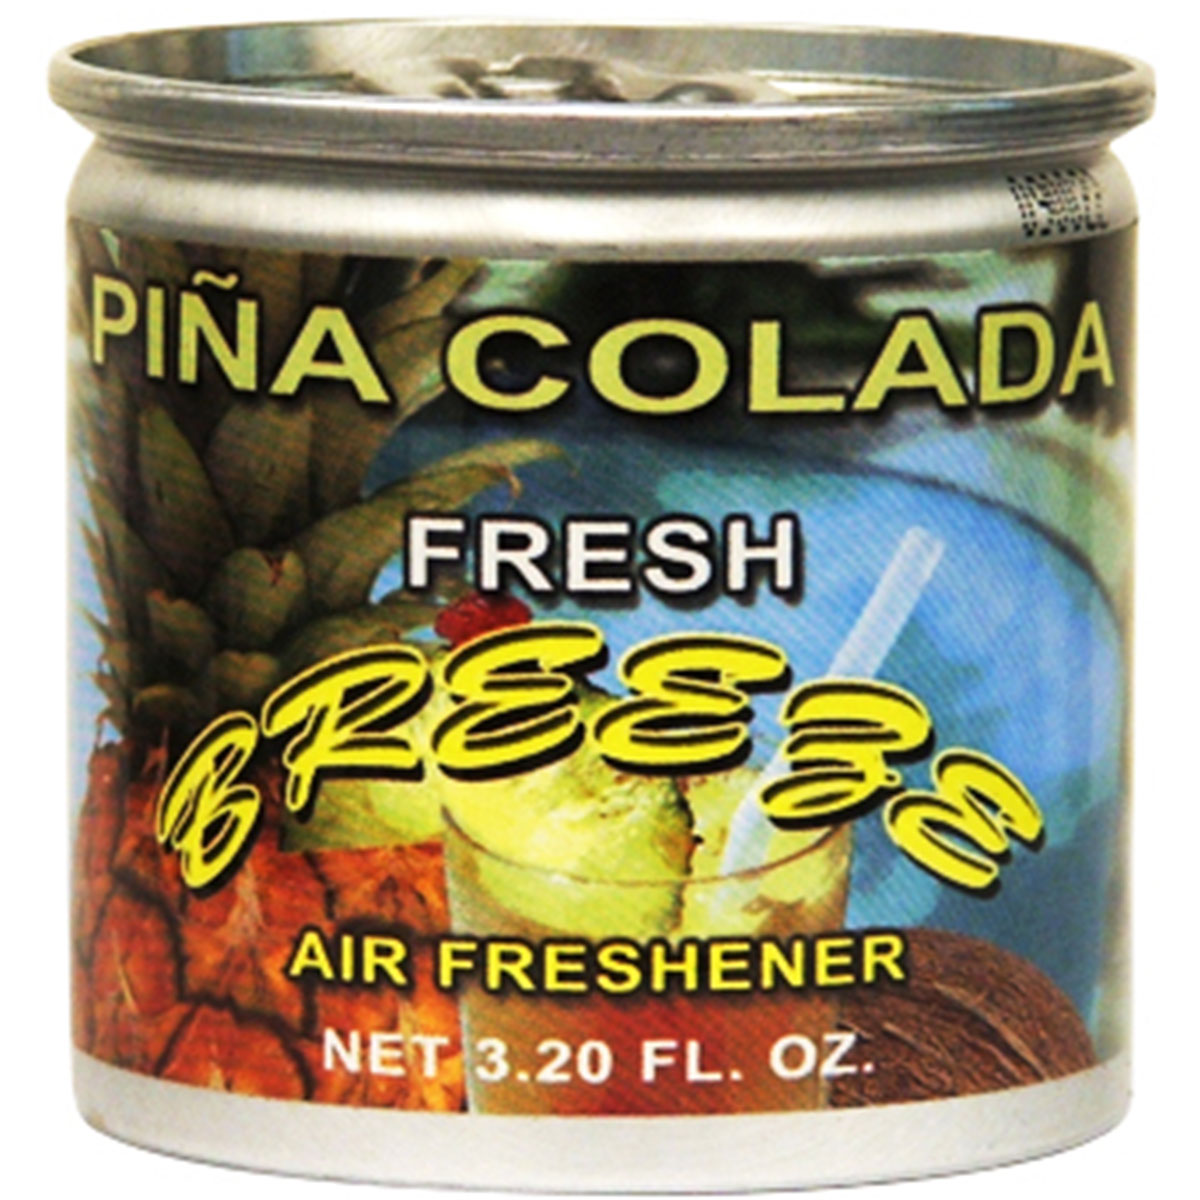 Air freshener can Breeze